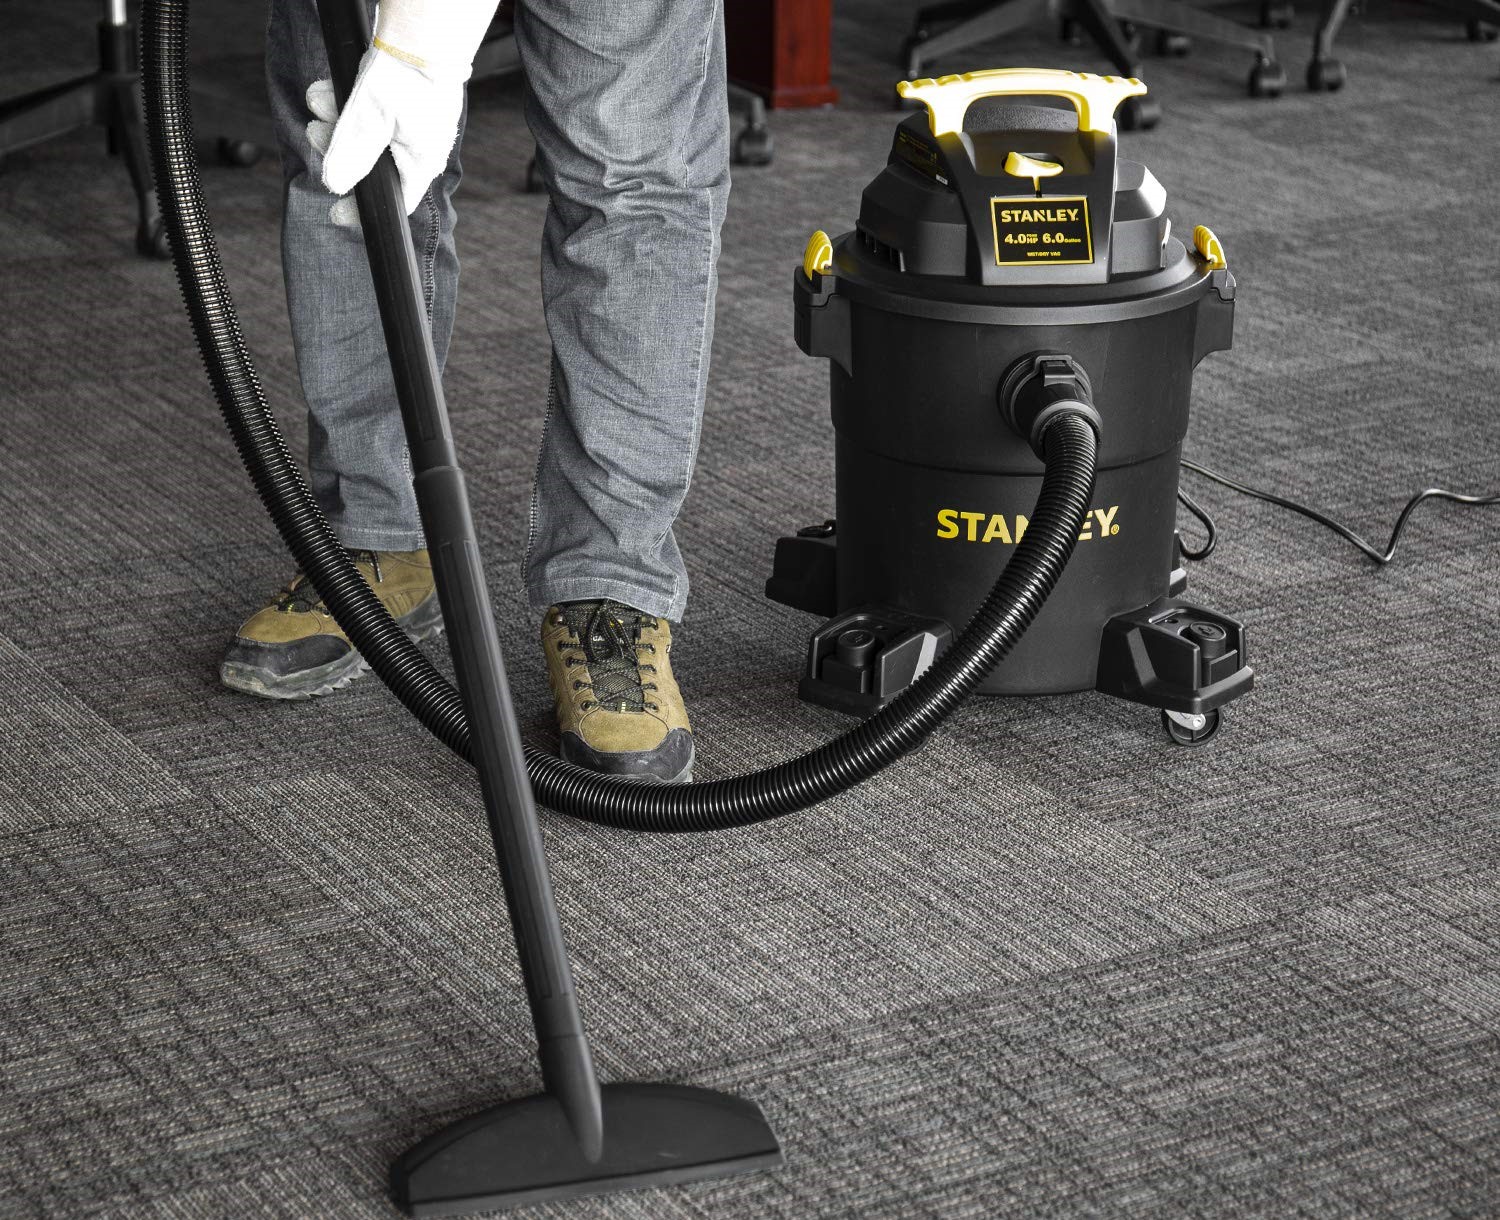 Stanley SL18116P Wet Dry Vacuum 1 - How to Use a Shop Vacuum on Wet Carpet? - HandyMan.Guide - Shop Vacuum on Wet Carpet